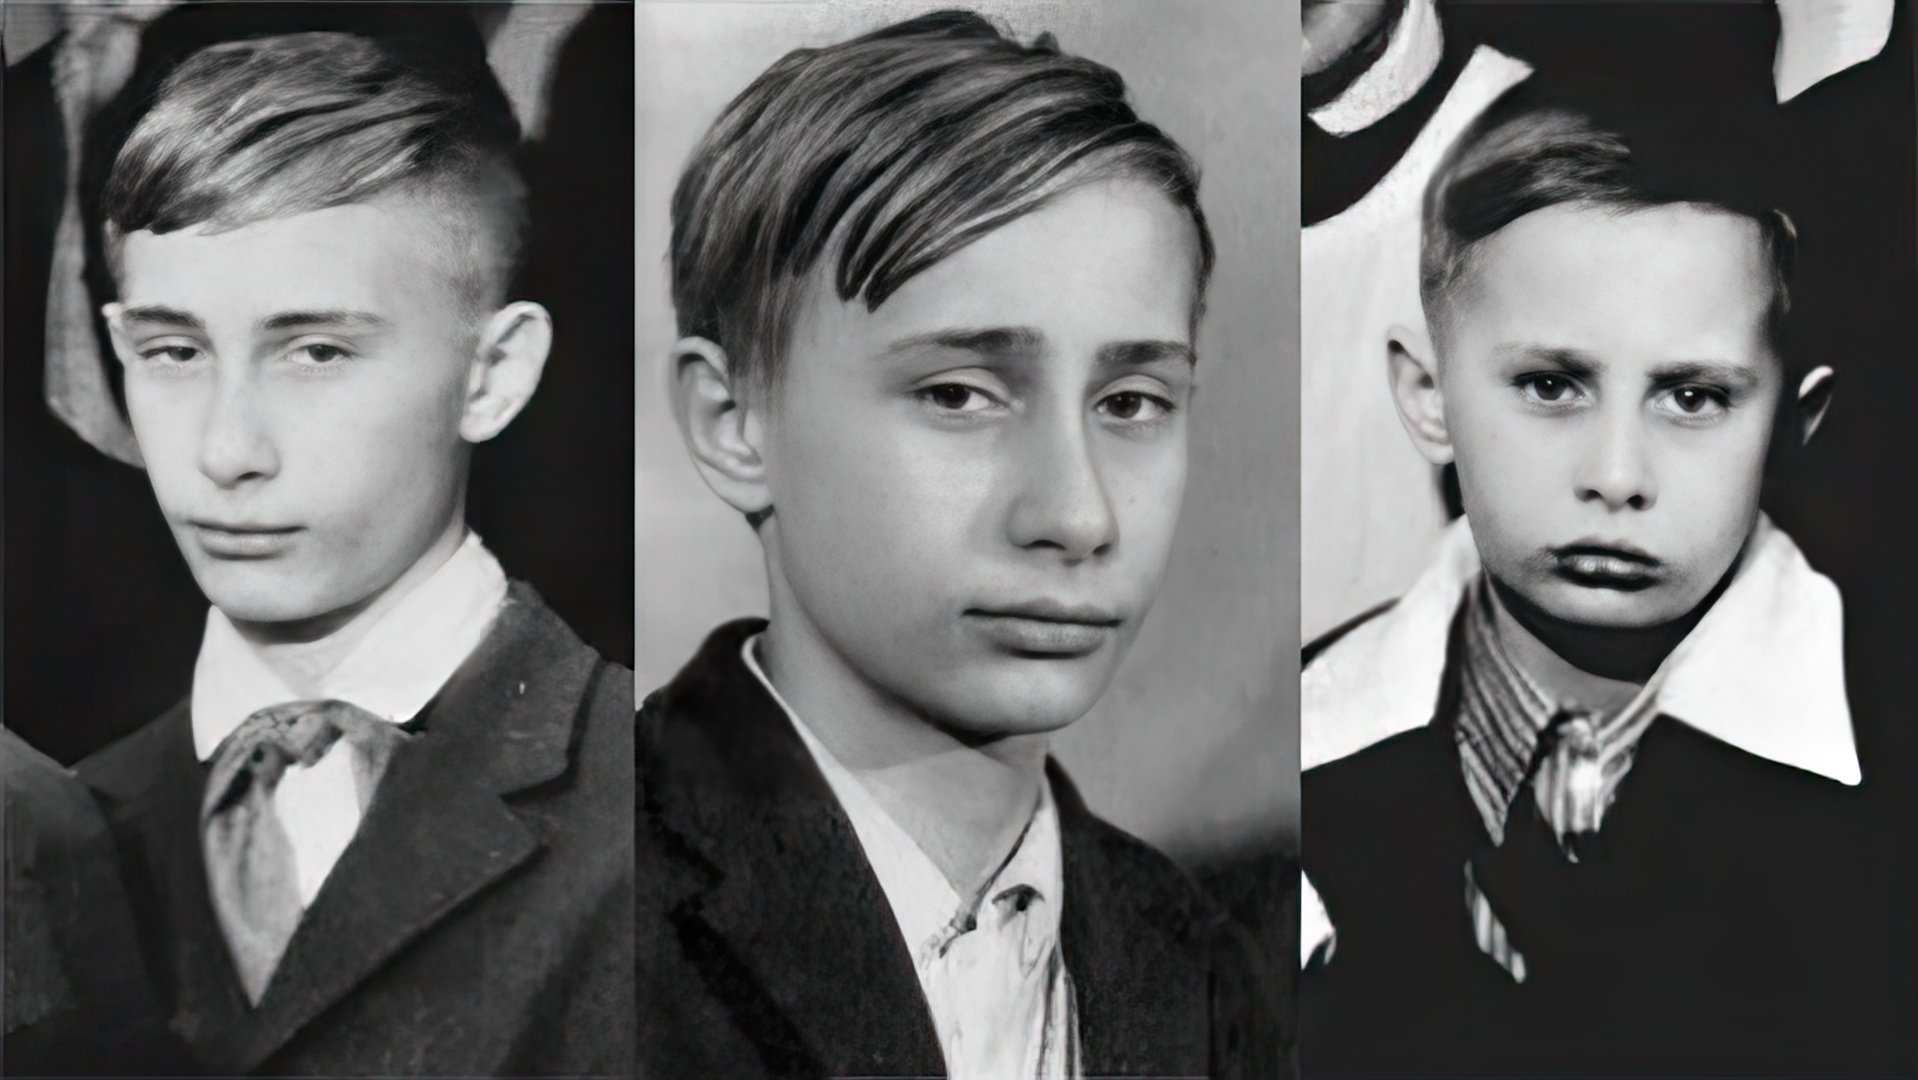 Vladimir Vladimirovich Putin in his youth